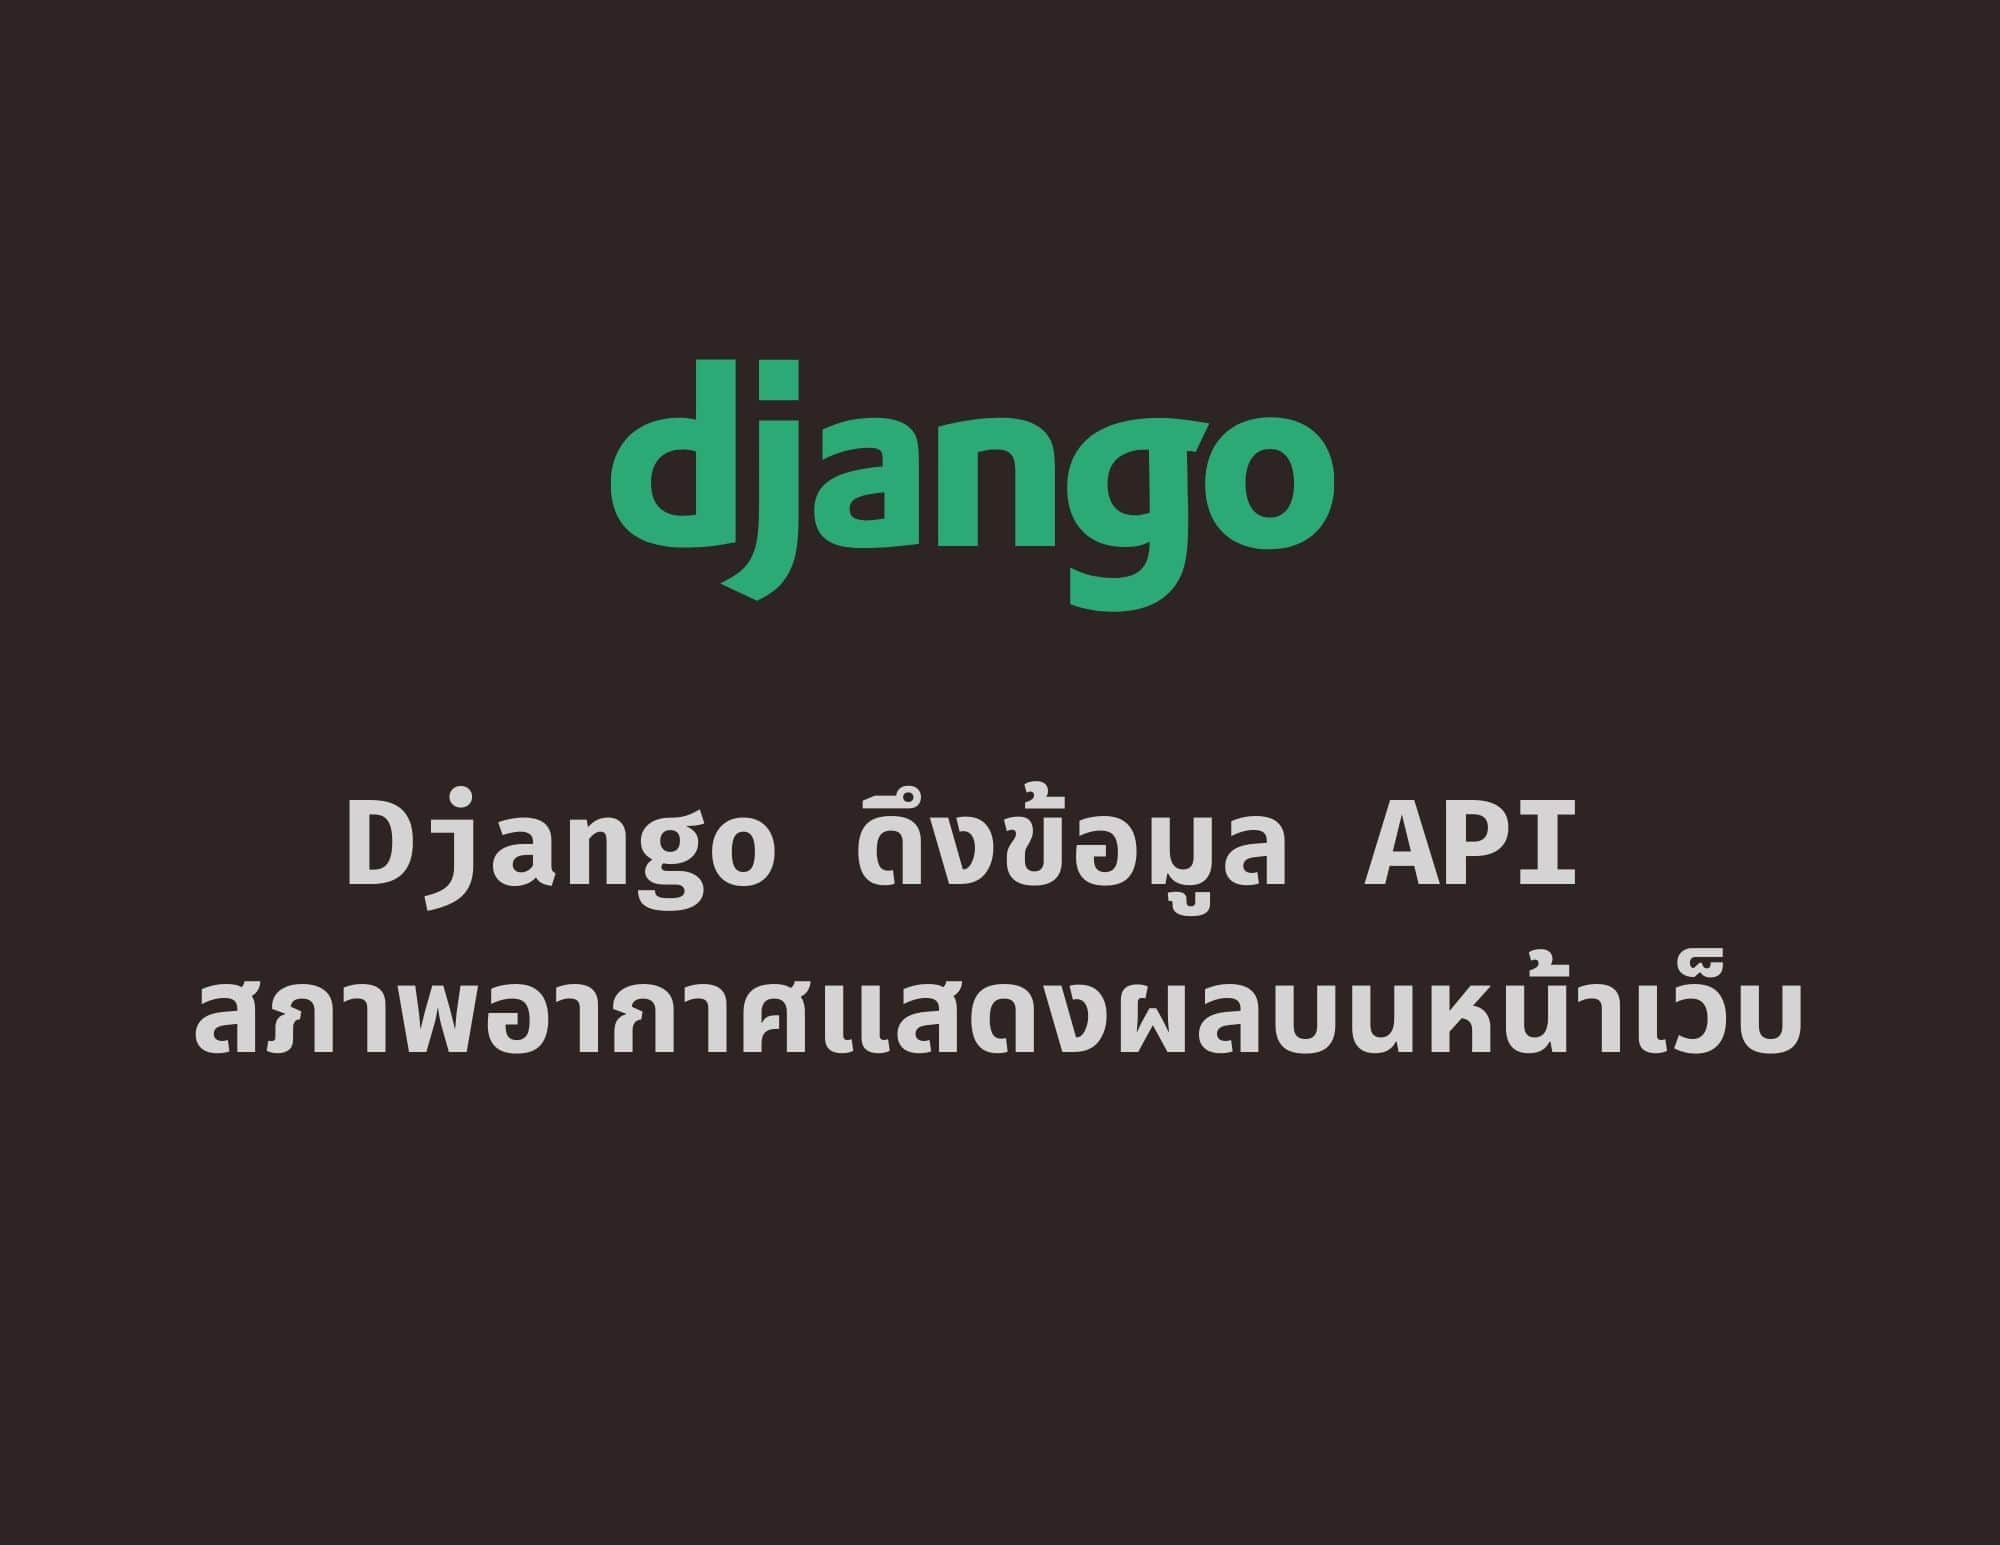 Django App ดึงข้อมูลสภาพอากาศผ่าน Open Weather Map API